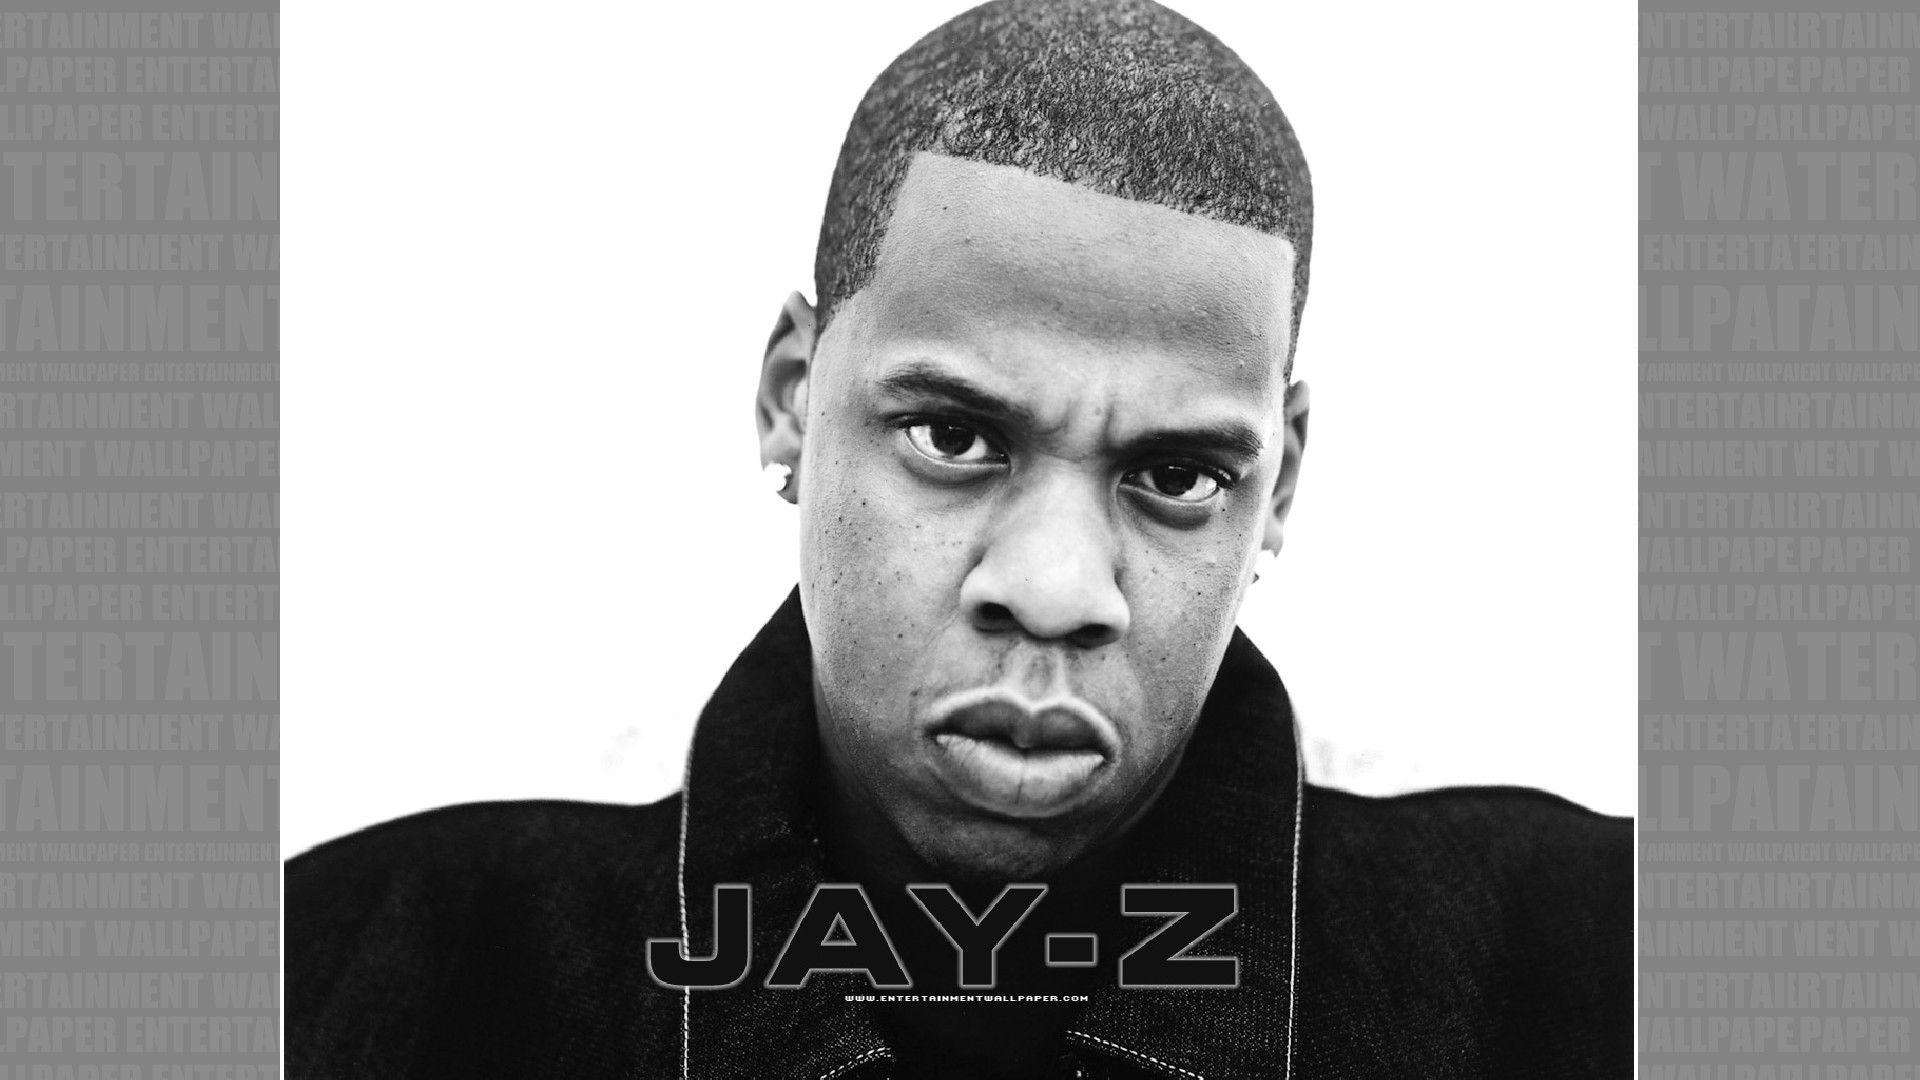 Jay-Z Wallpaper – Original size, download now.